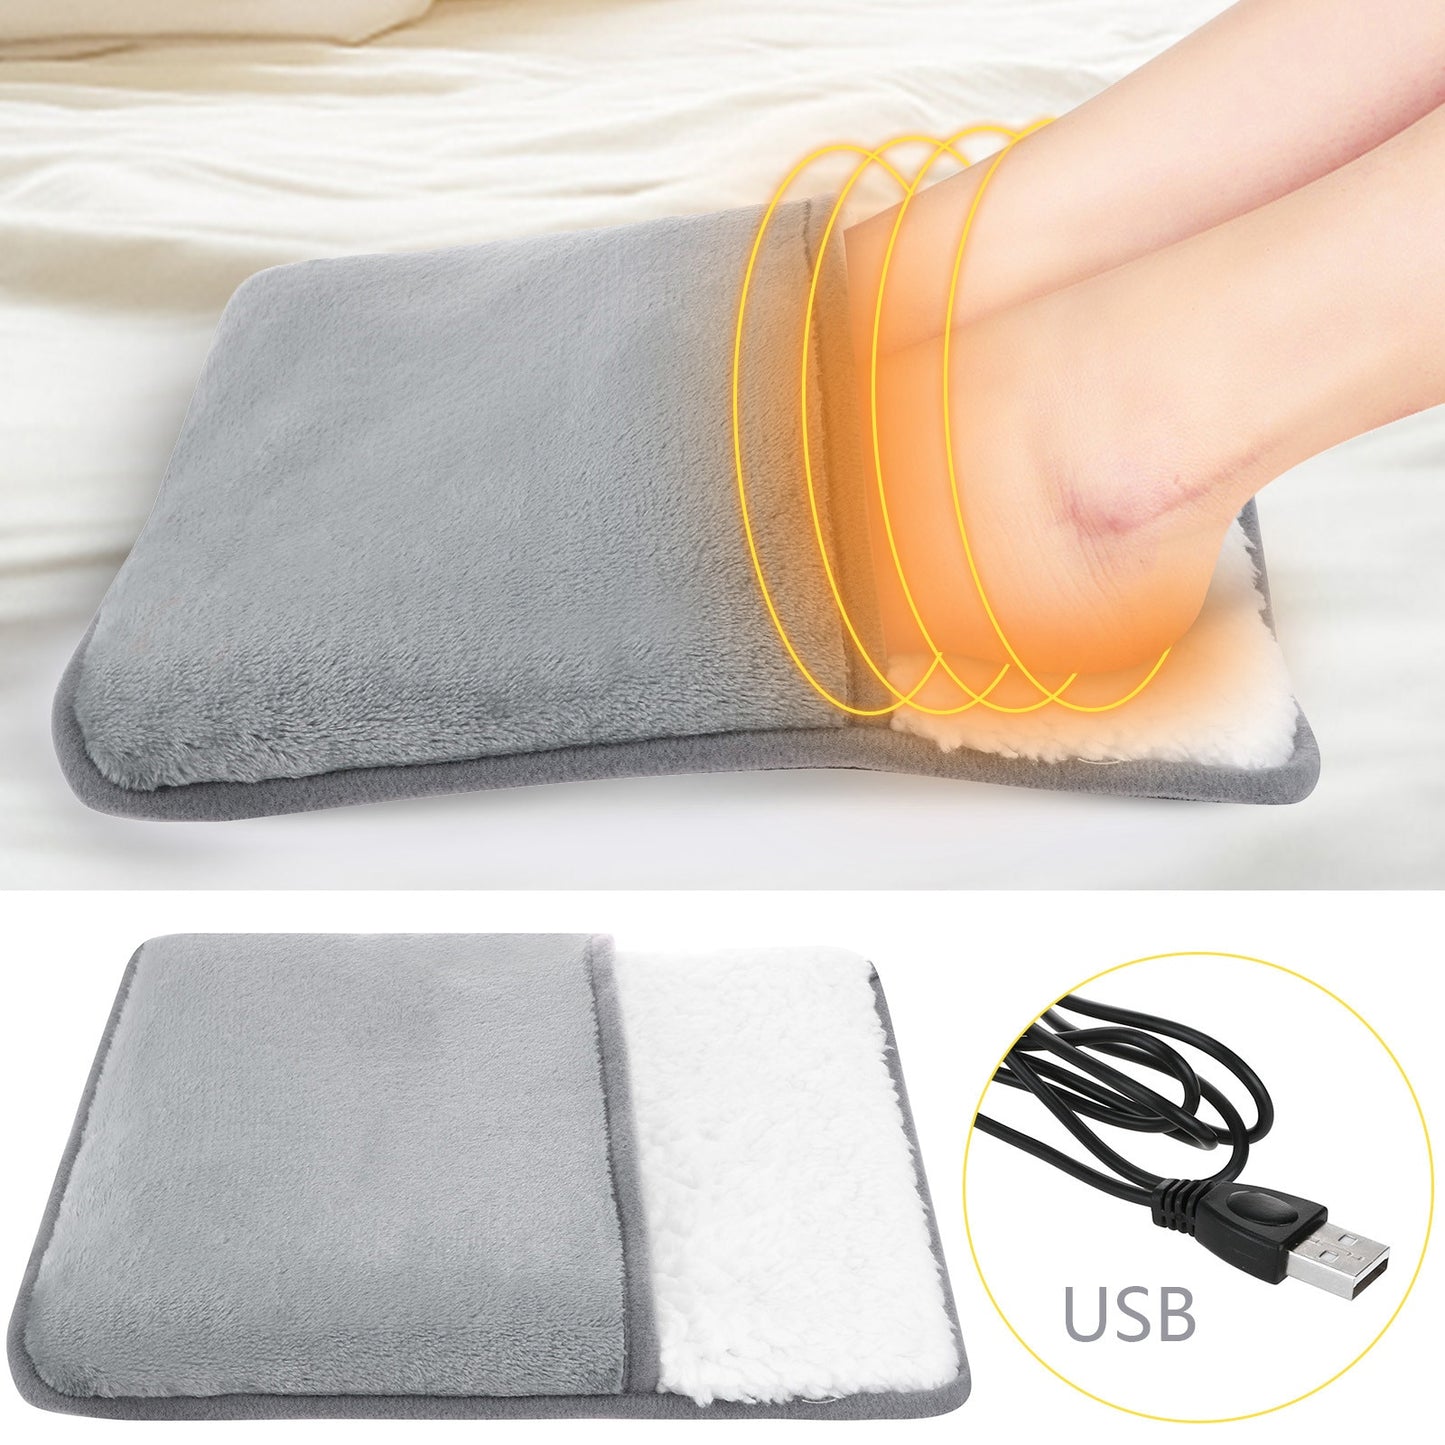 USB Electric Heating Pad Feet Fleece Winter Hand Foot Warmer Slippers